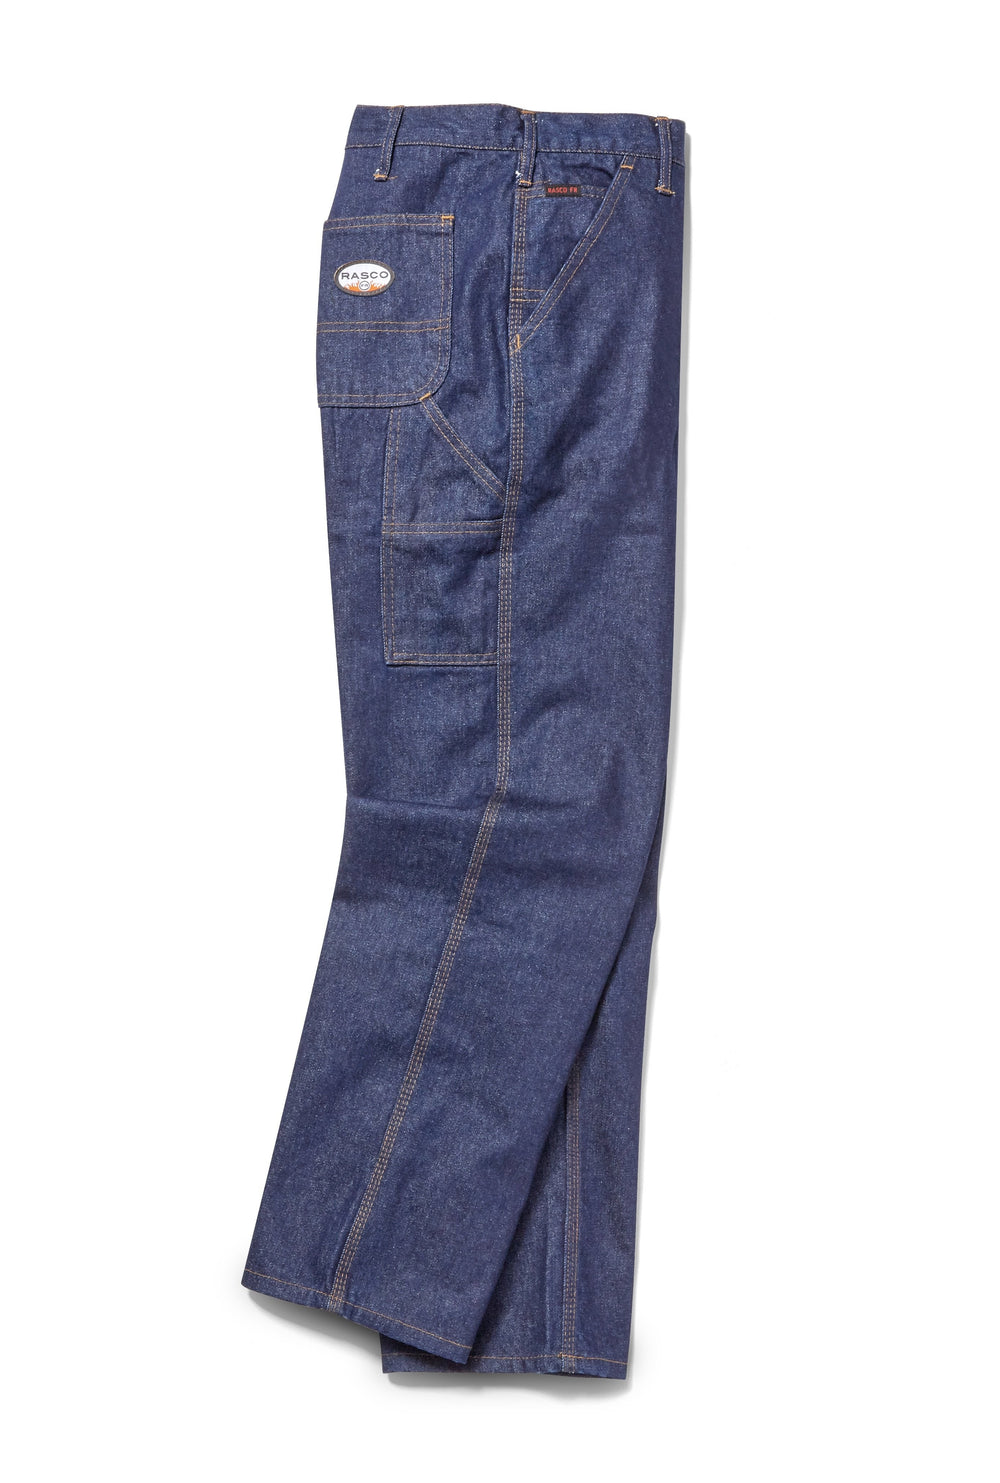 Rasco FR Flame Resistant Blue Denim Carpenter Pants - FR4522DN